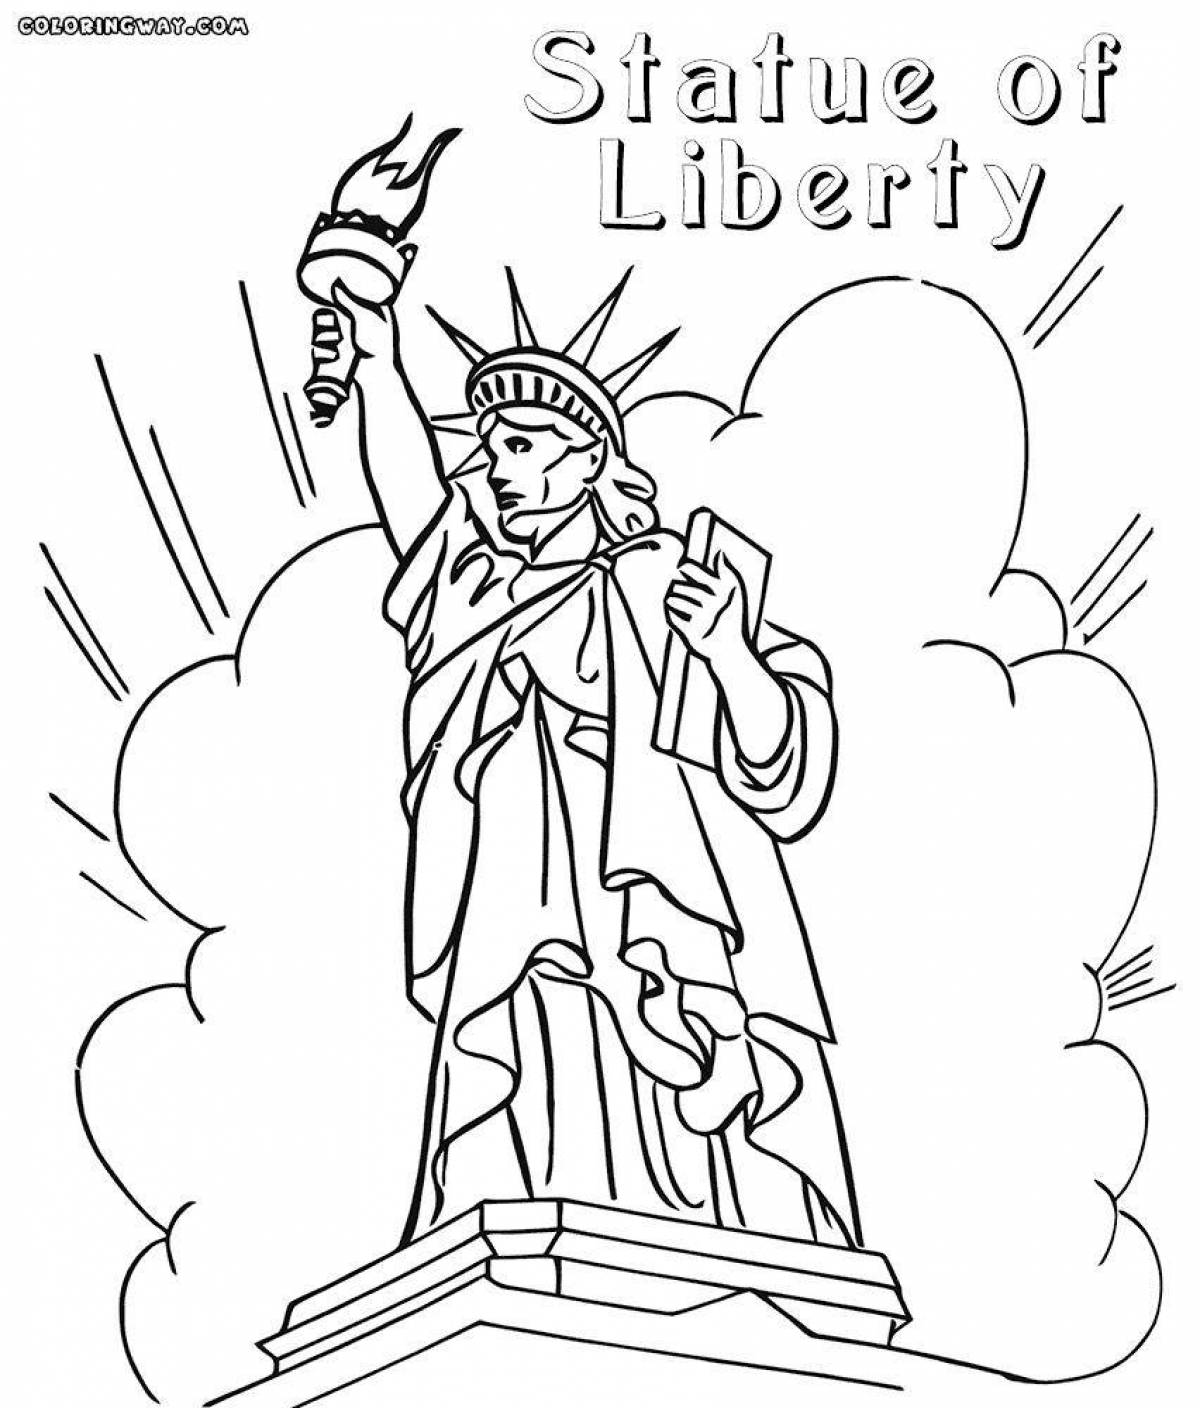 Statue of Liberty #12